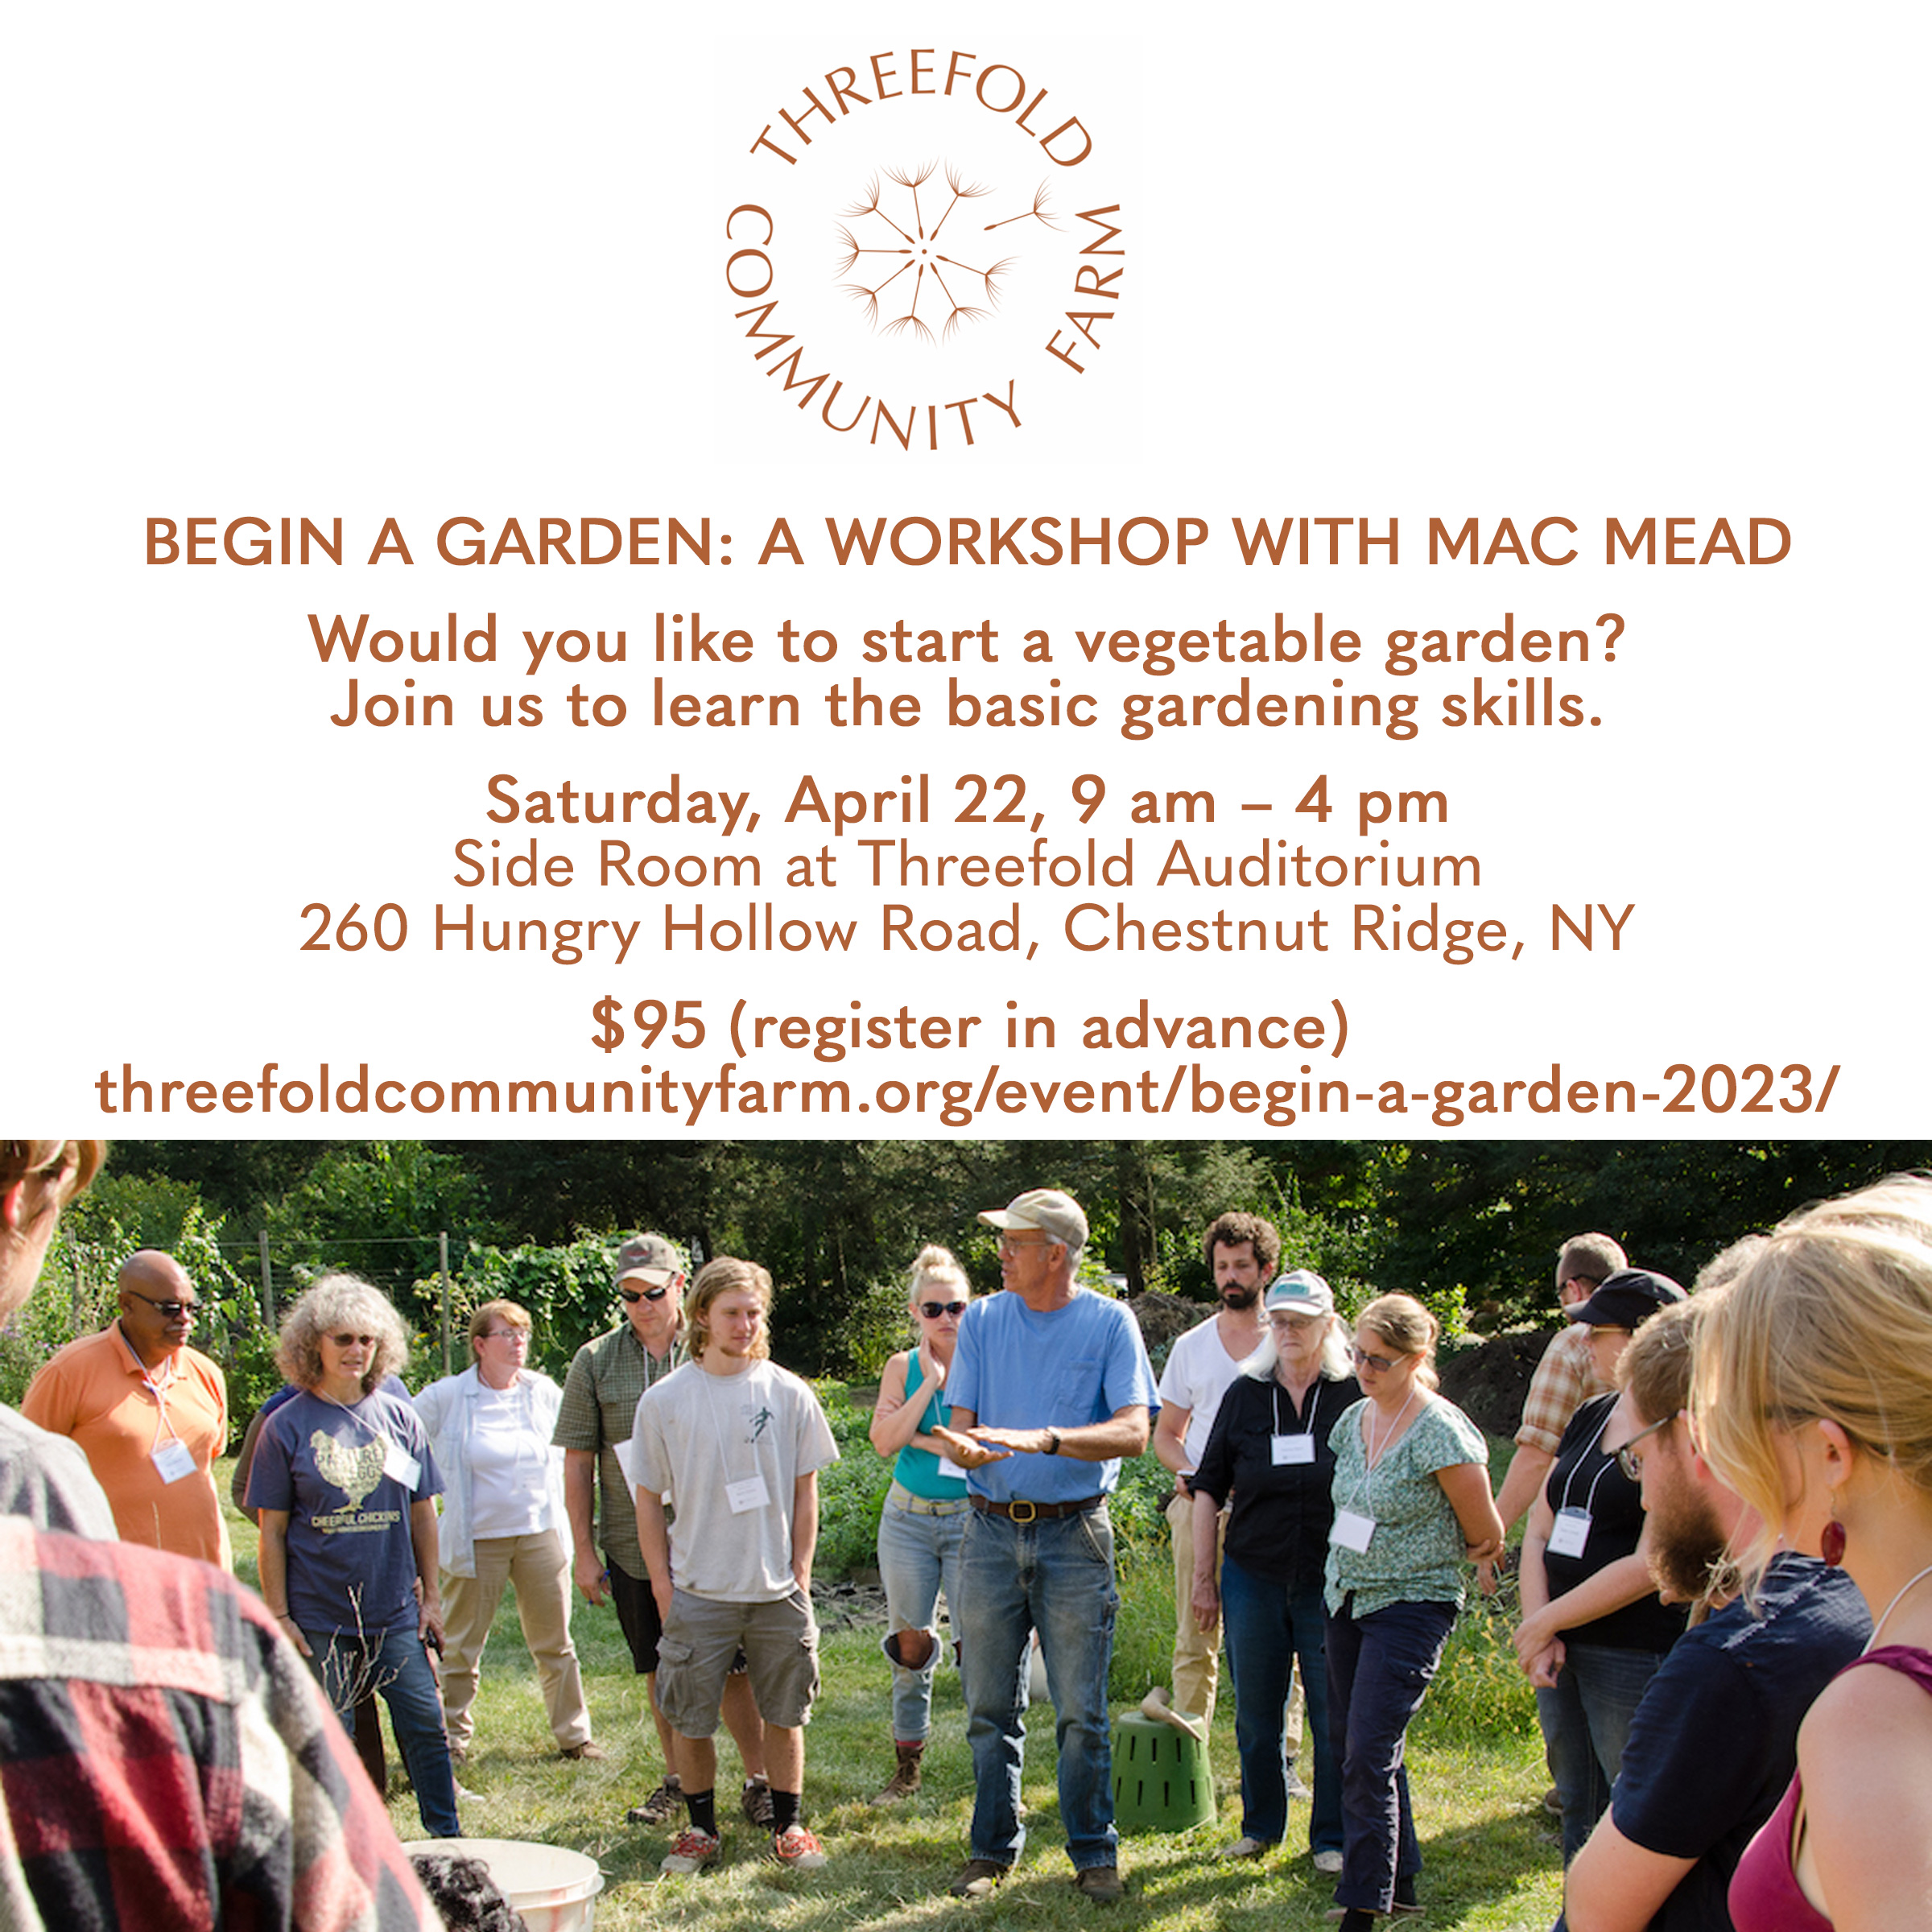 Begin a Garden with Mac Mead Workshop